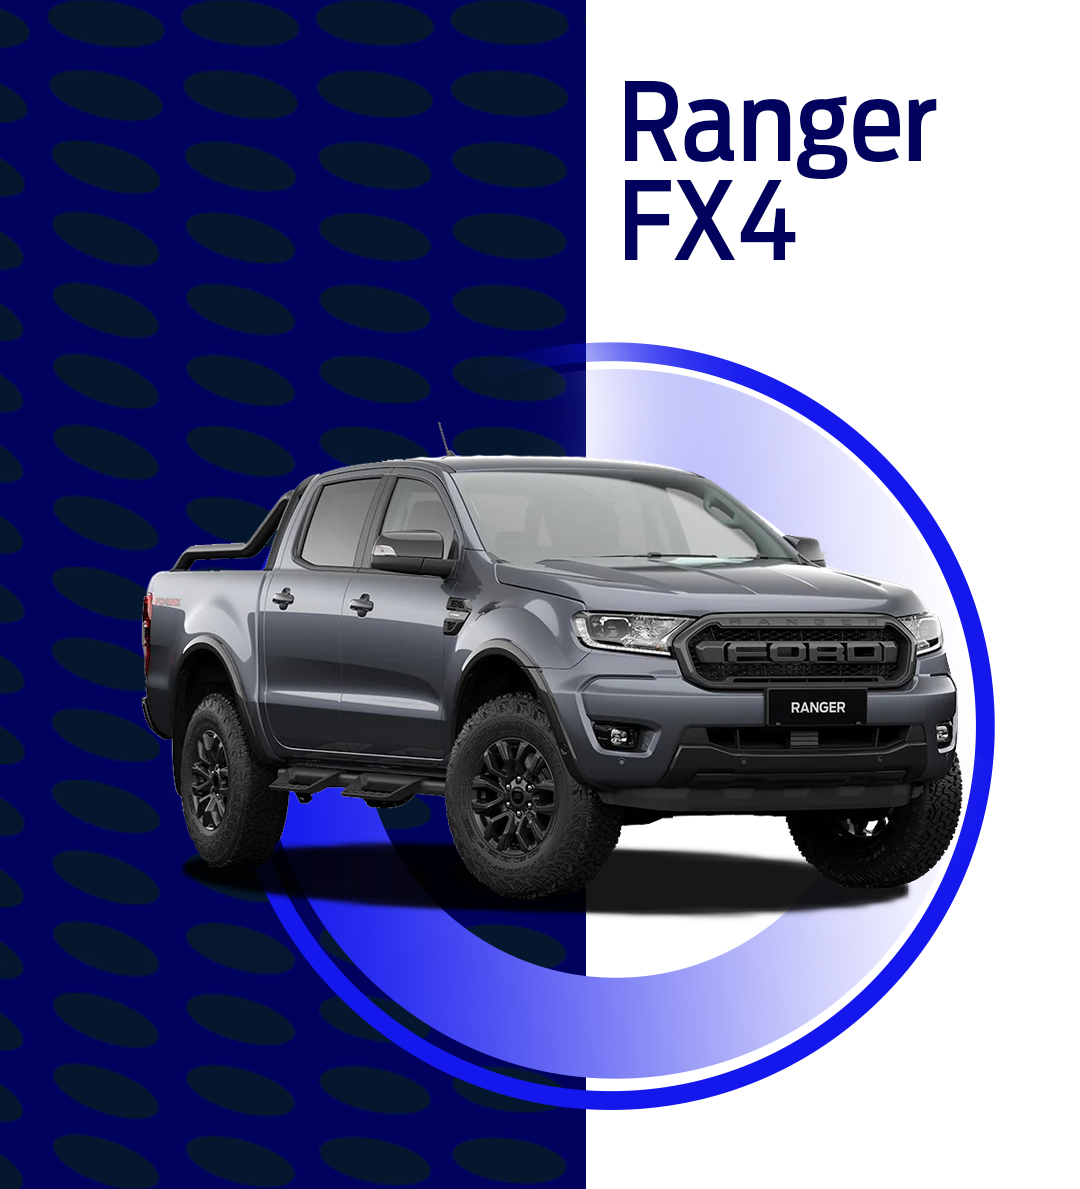 Reserva-vehiculo-Ranger-fx4